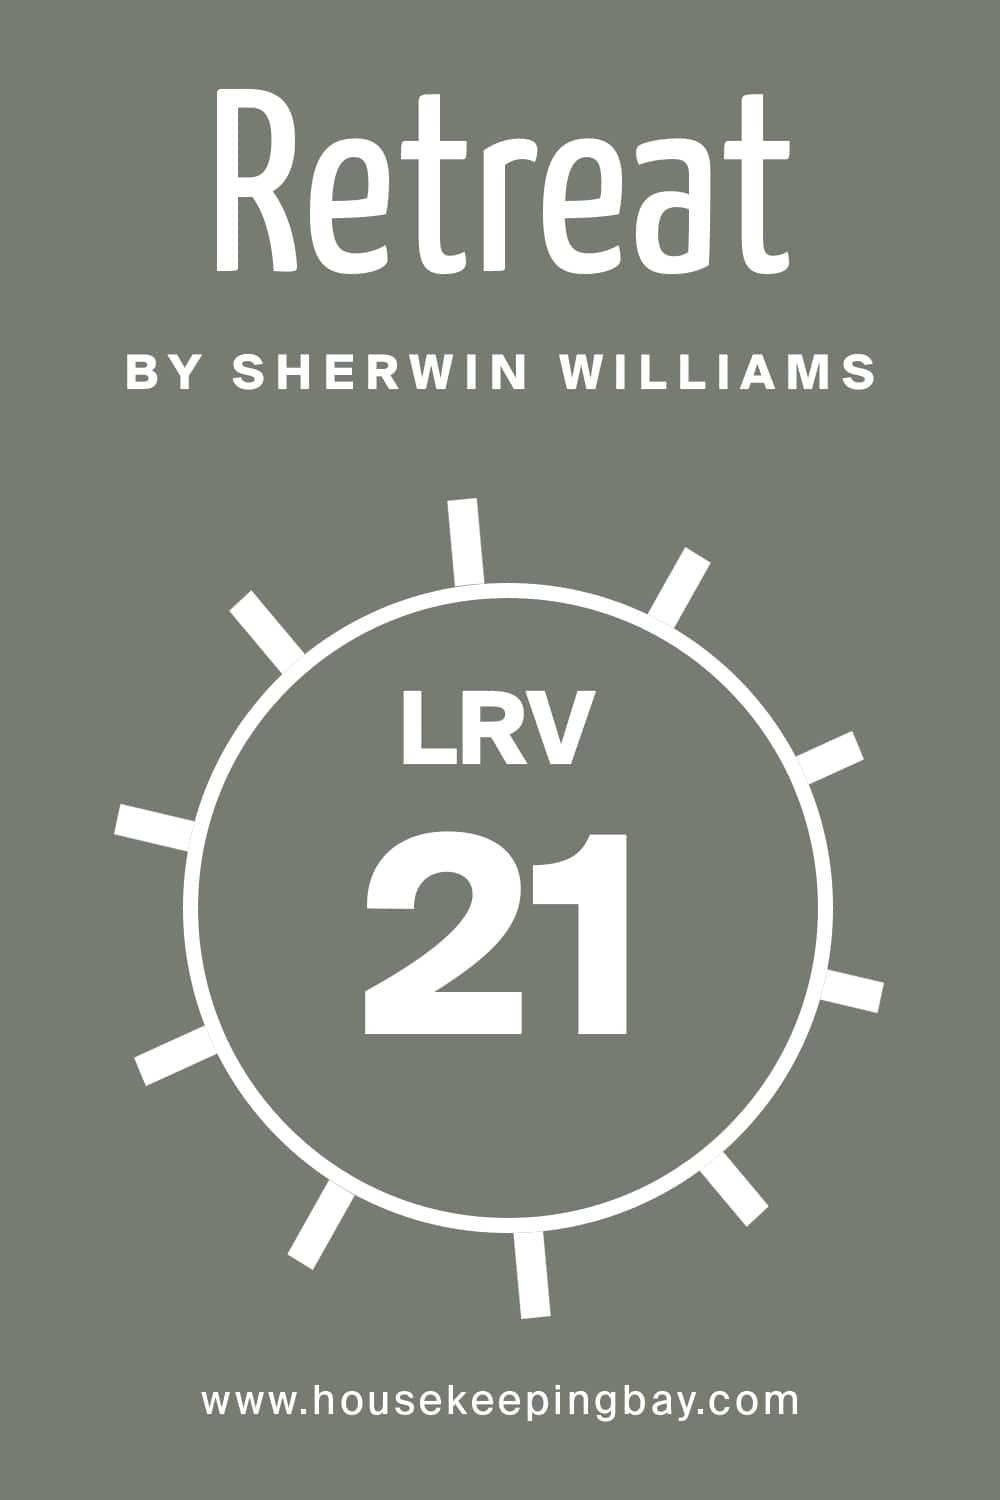 Retreat by Sherwin Williams. LRV – 21